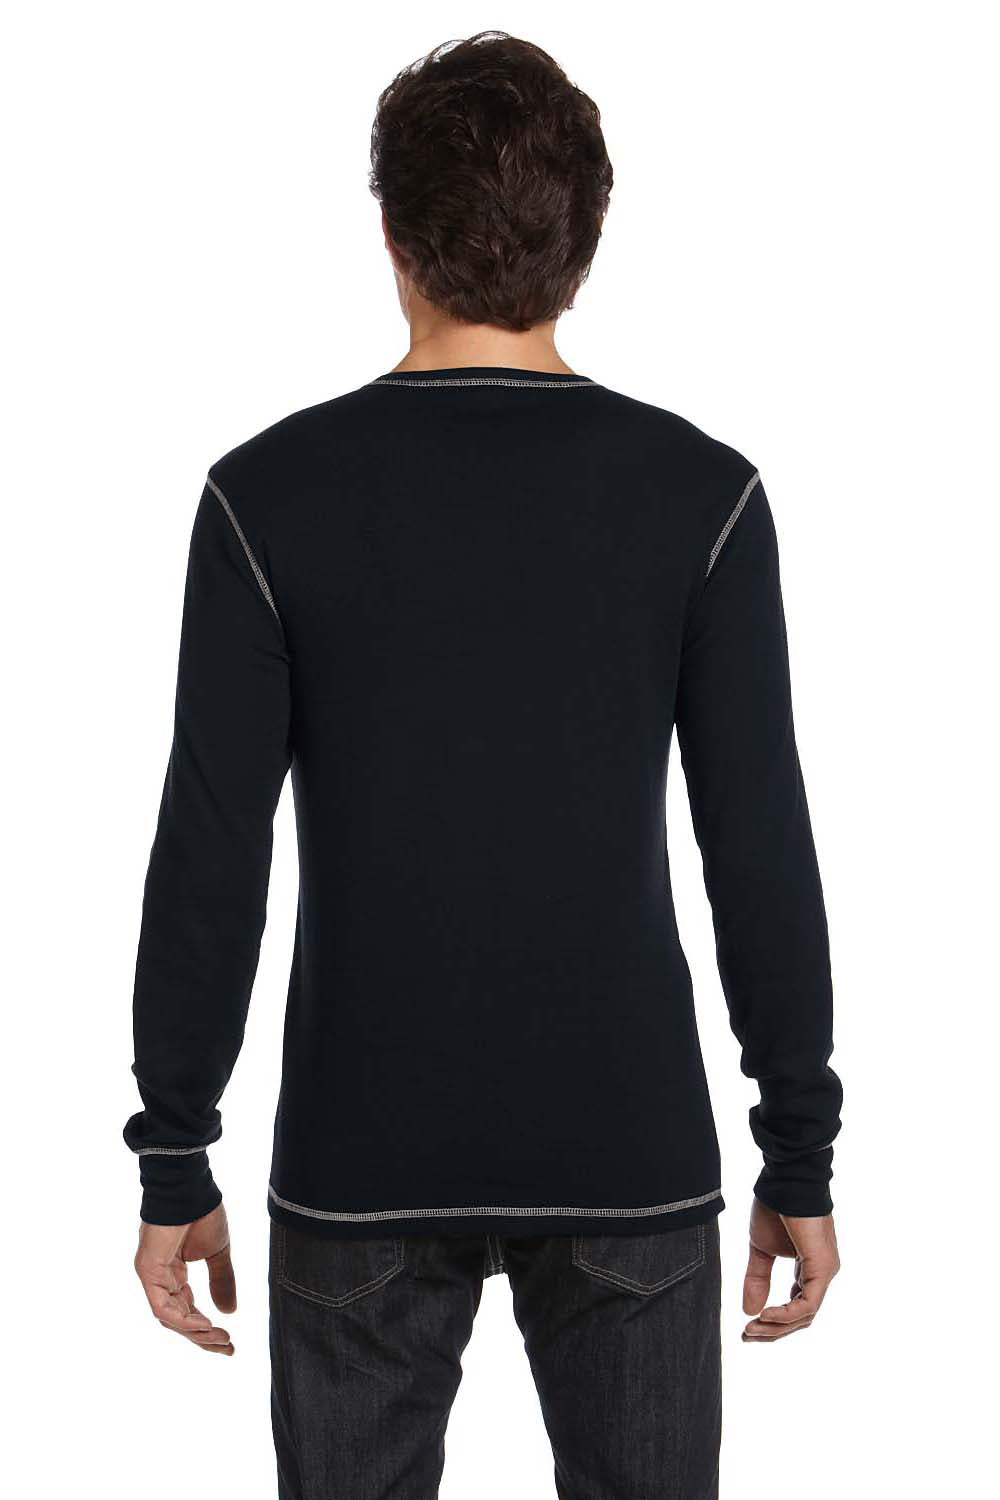 Bella + Canvas 3500 Mens Thermal Long Sleeve Crewneck T-Shirt Black/Grey Back